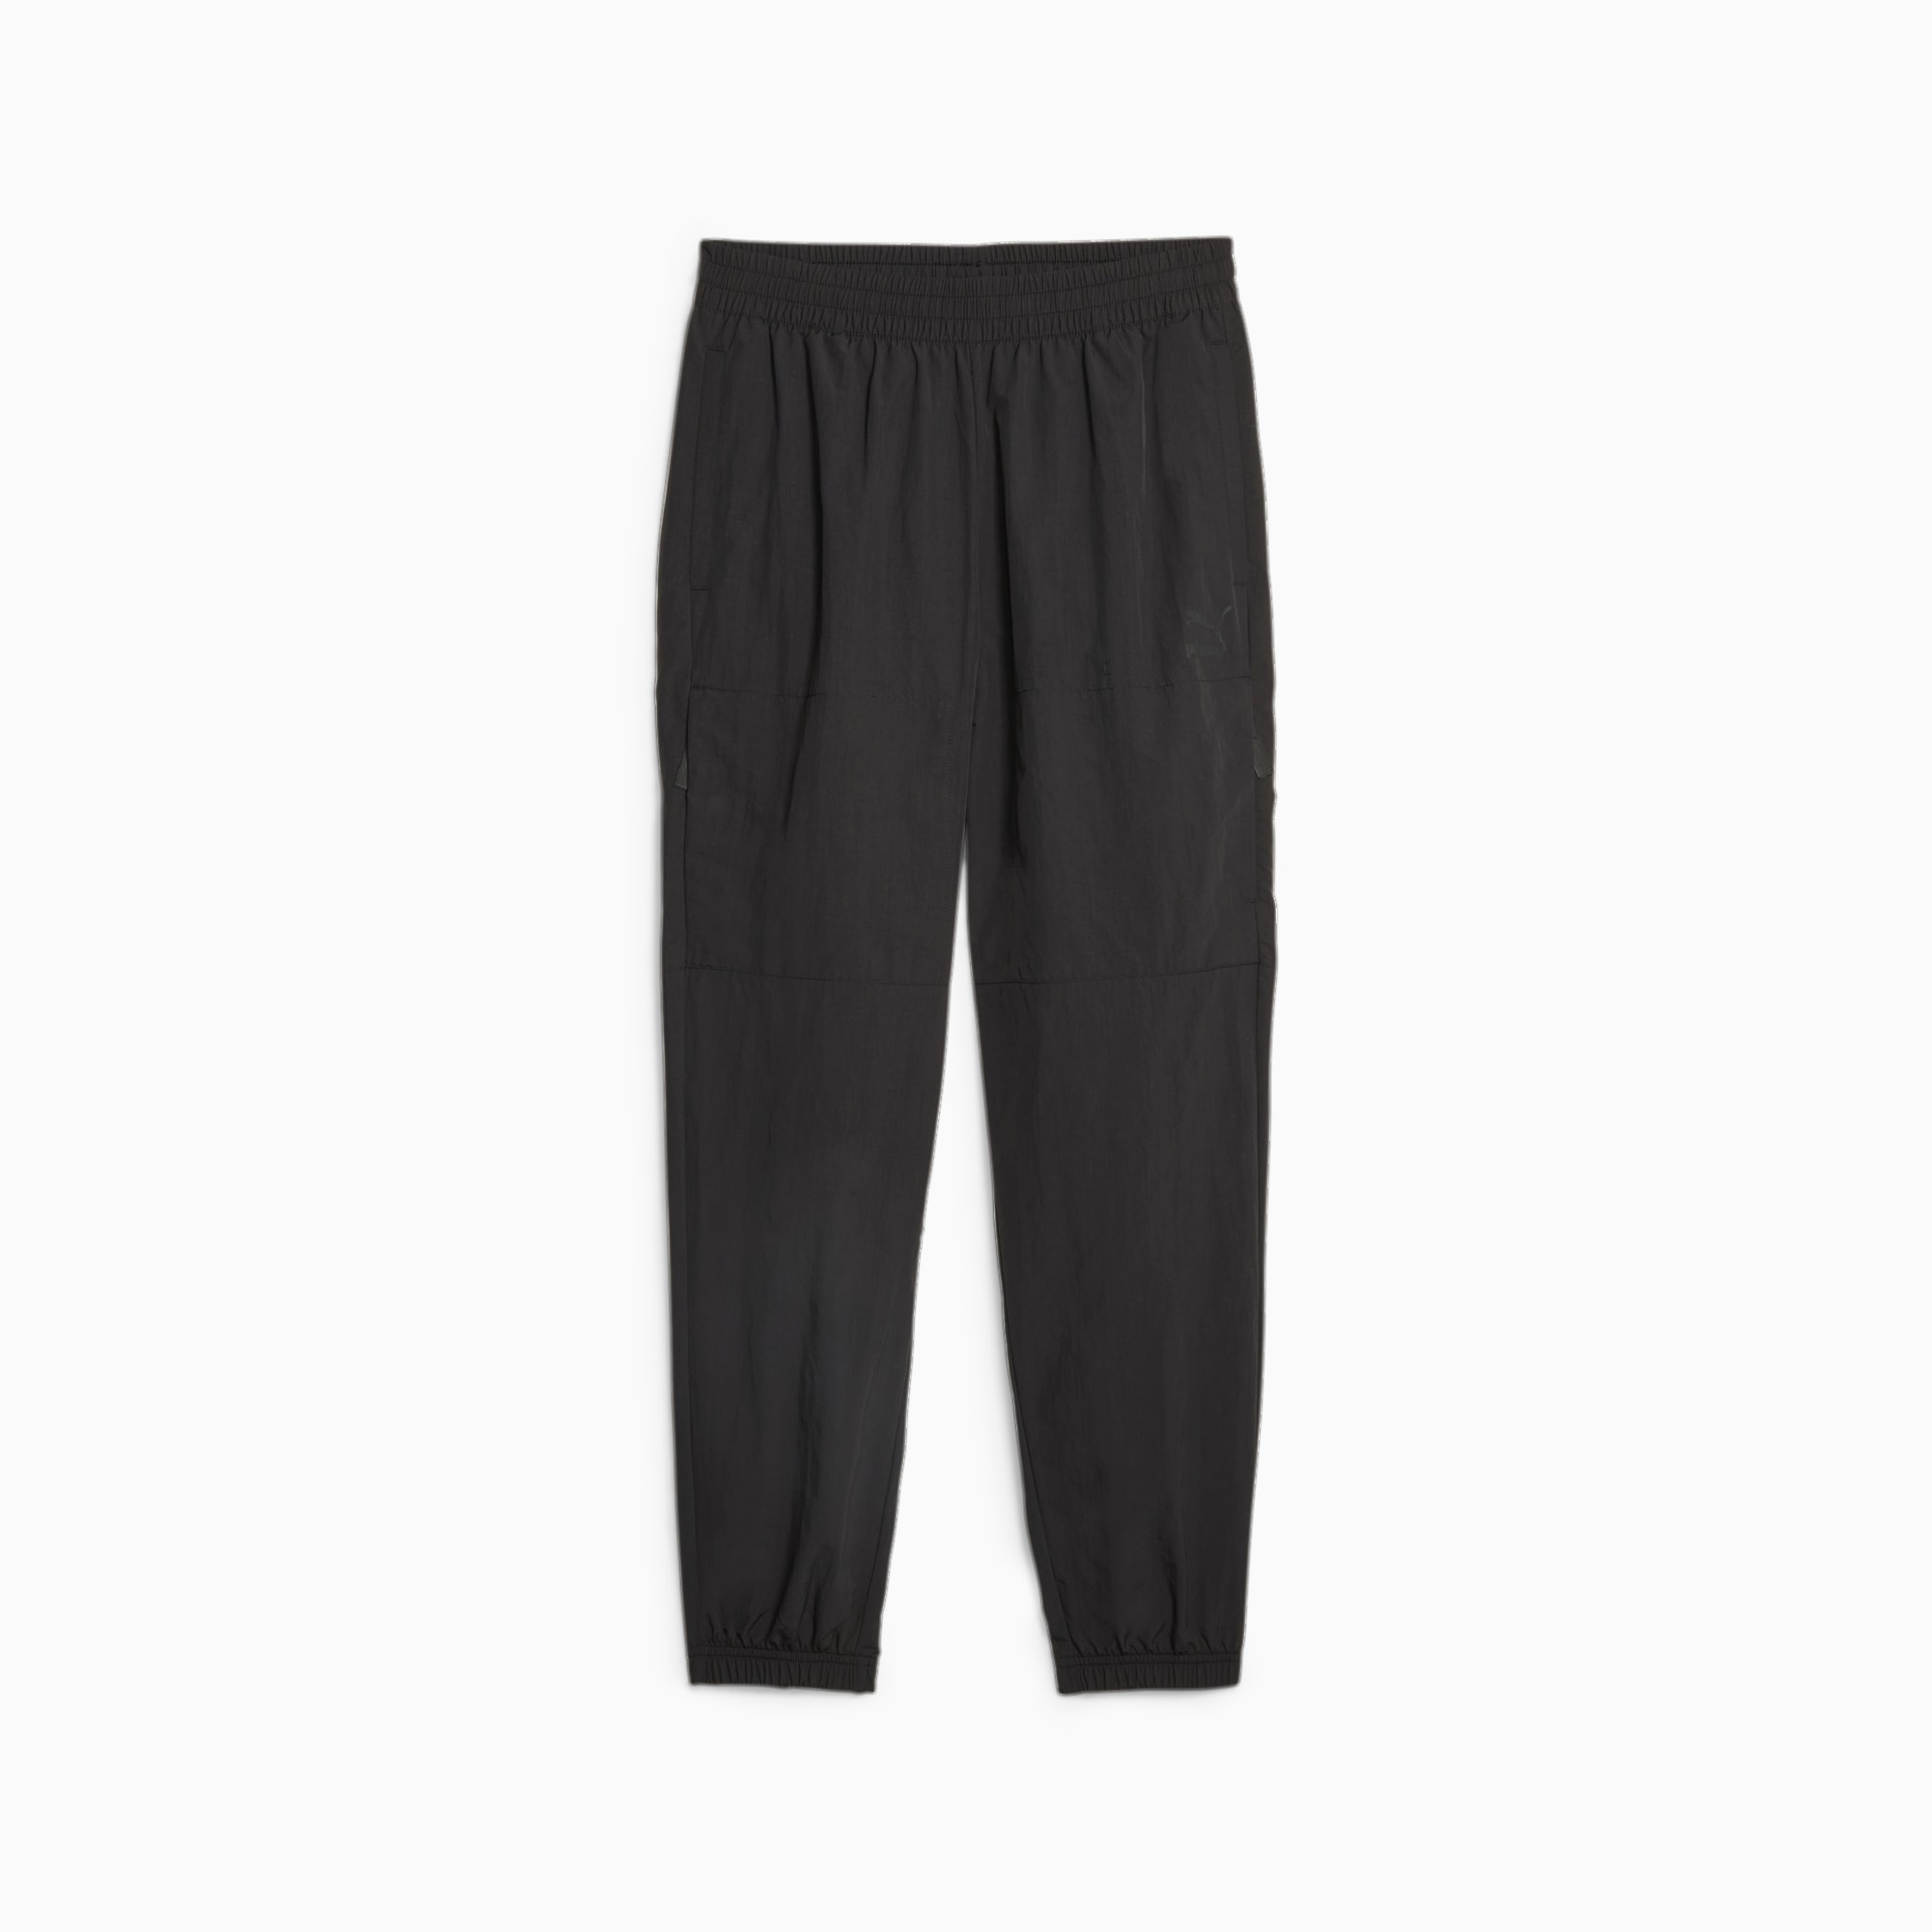 PUMA Classics Utility Men's Cargo Pants, Black, Size 3XL, Clothing